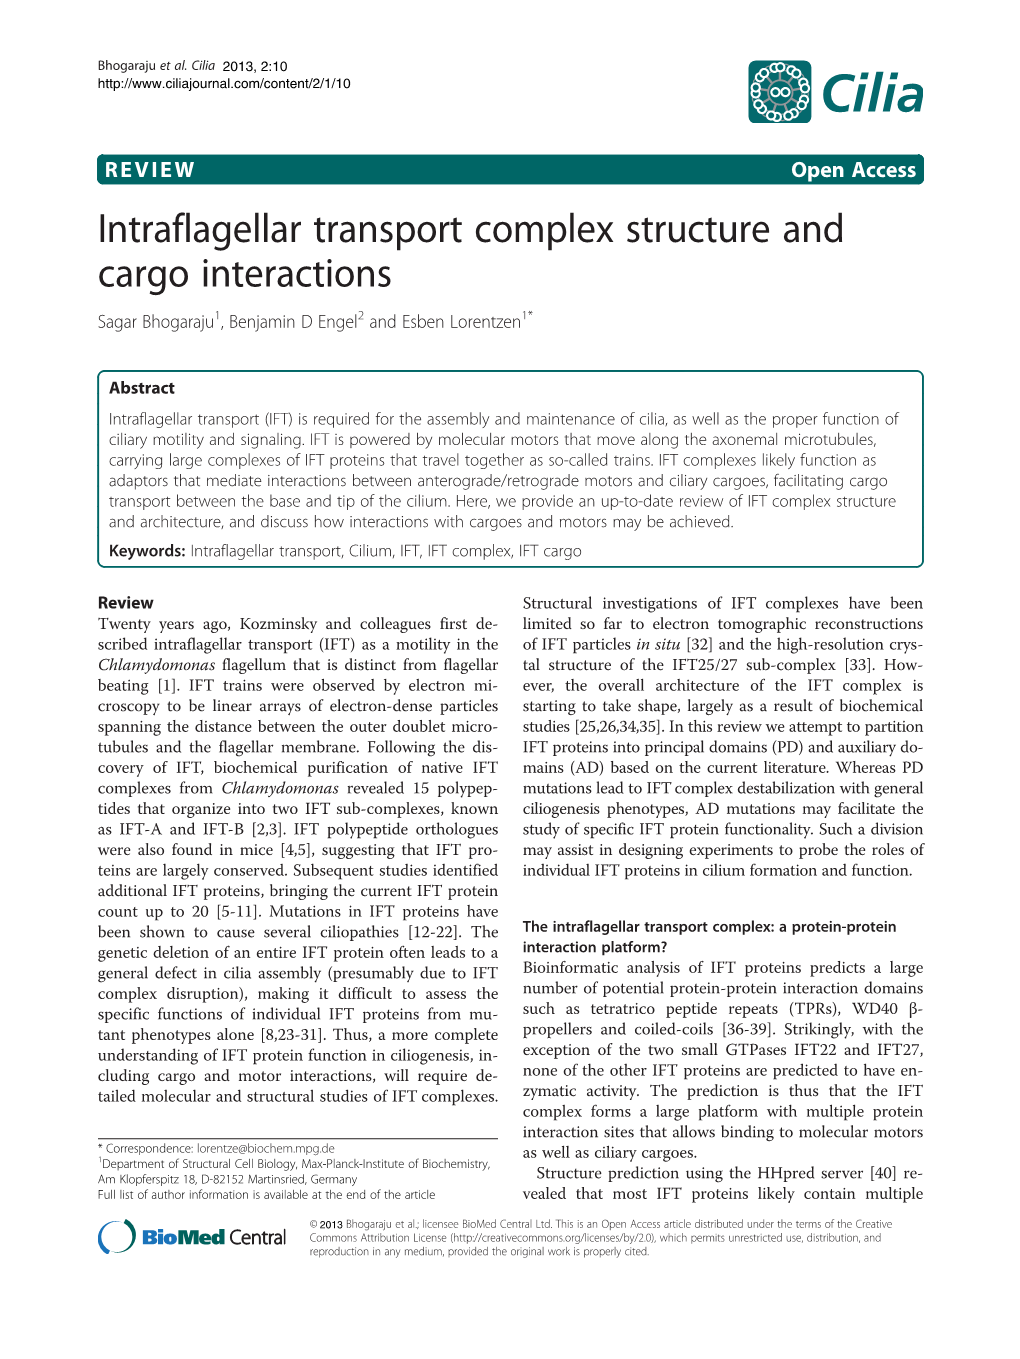 Intraflagellar Transport Complex Structure and Cargo Interactions Sagar Bhogaraju1, Benjamin D Engel2 and Esben Lorentzen1*